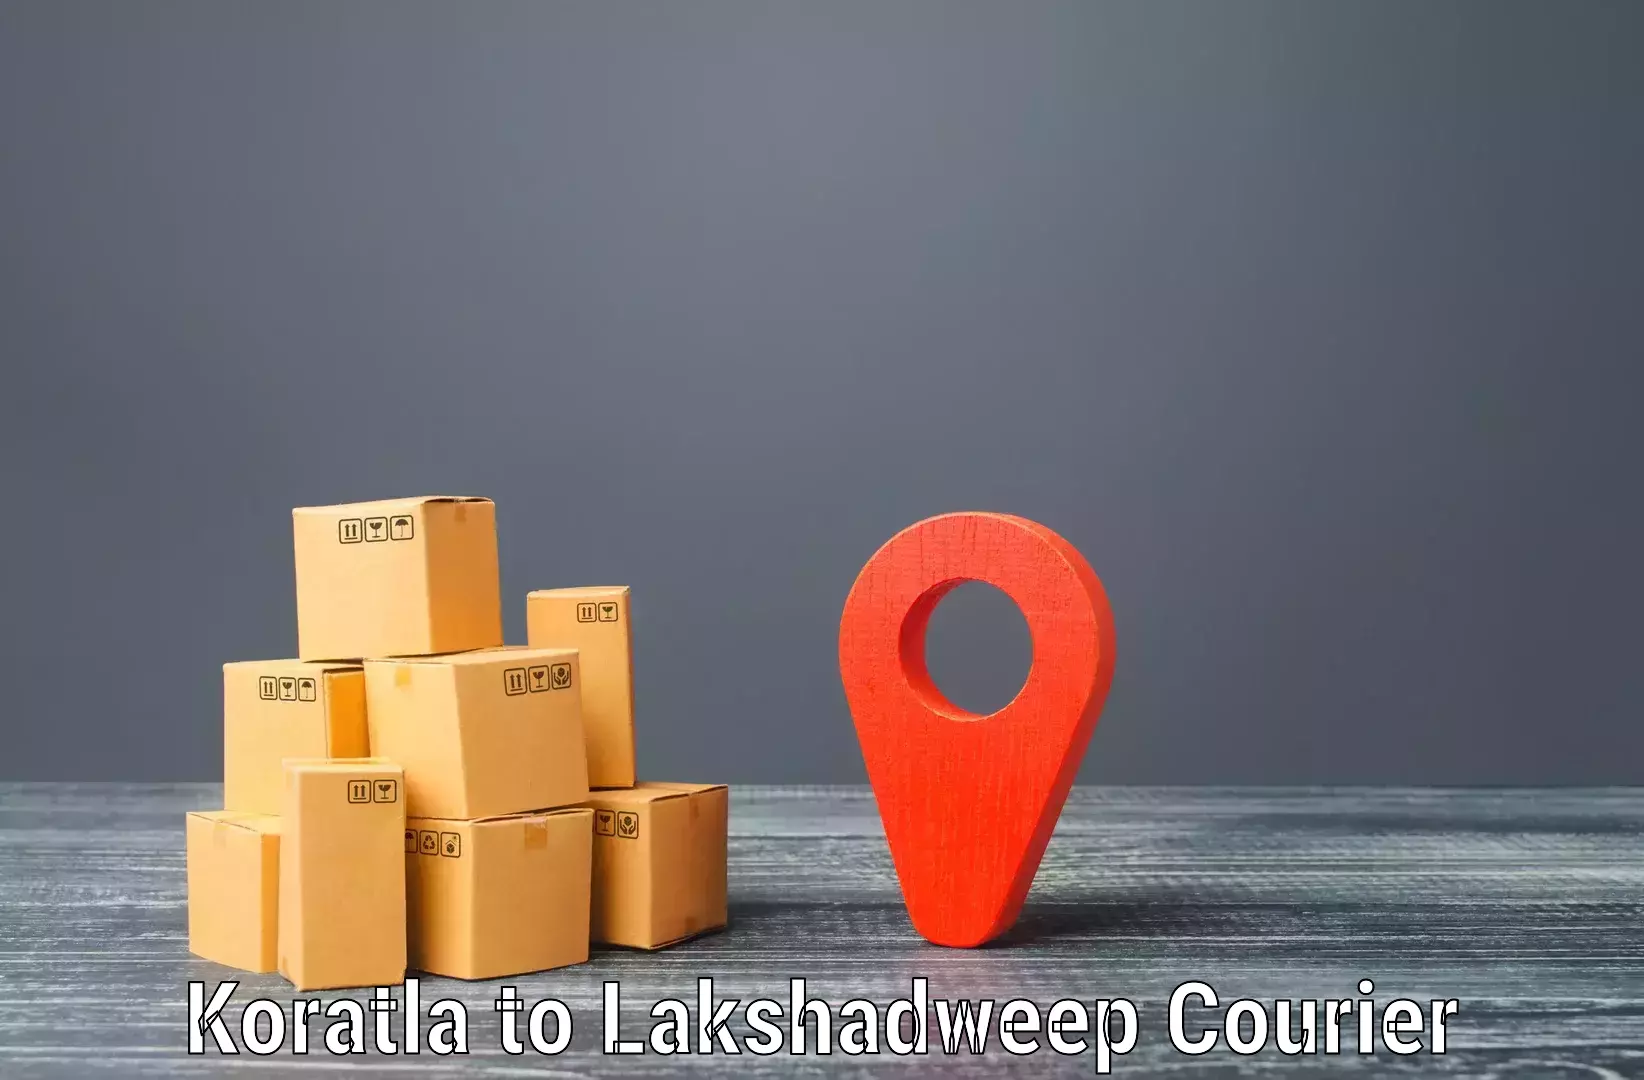 Tech-enabled shipping Koratla to Lakshadweep